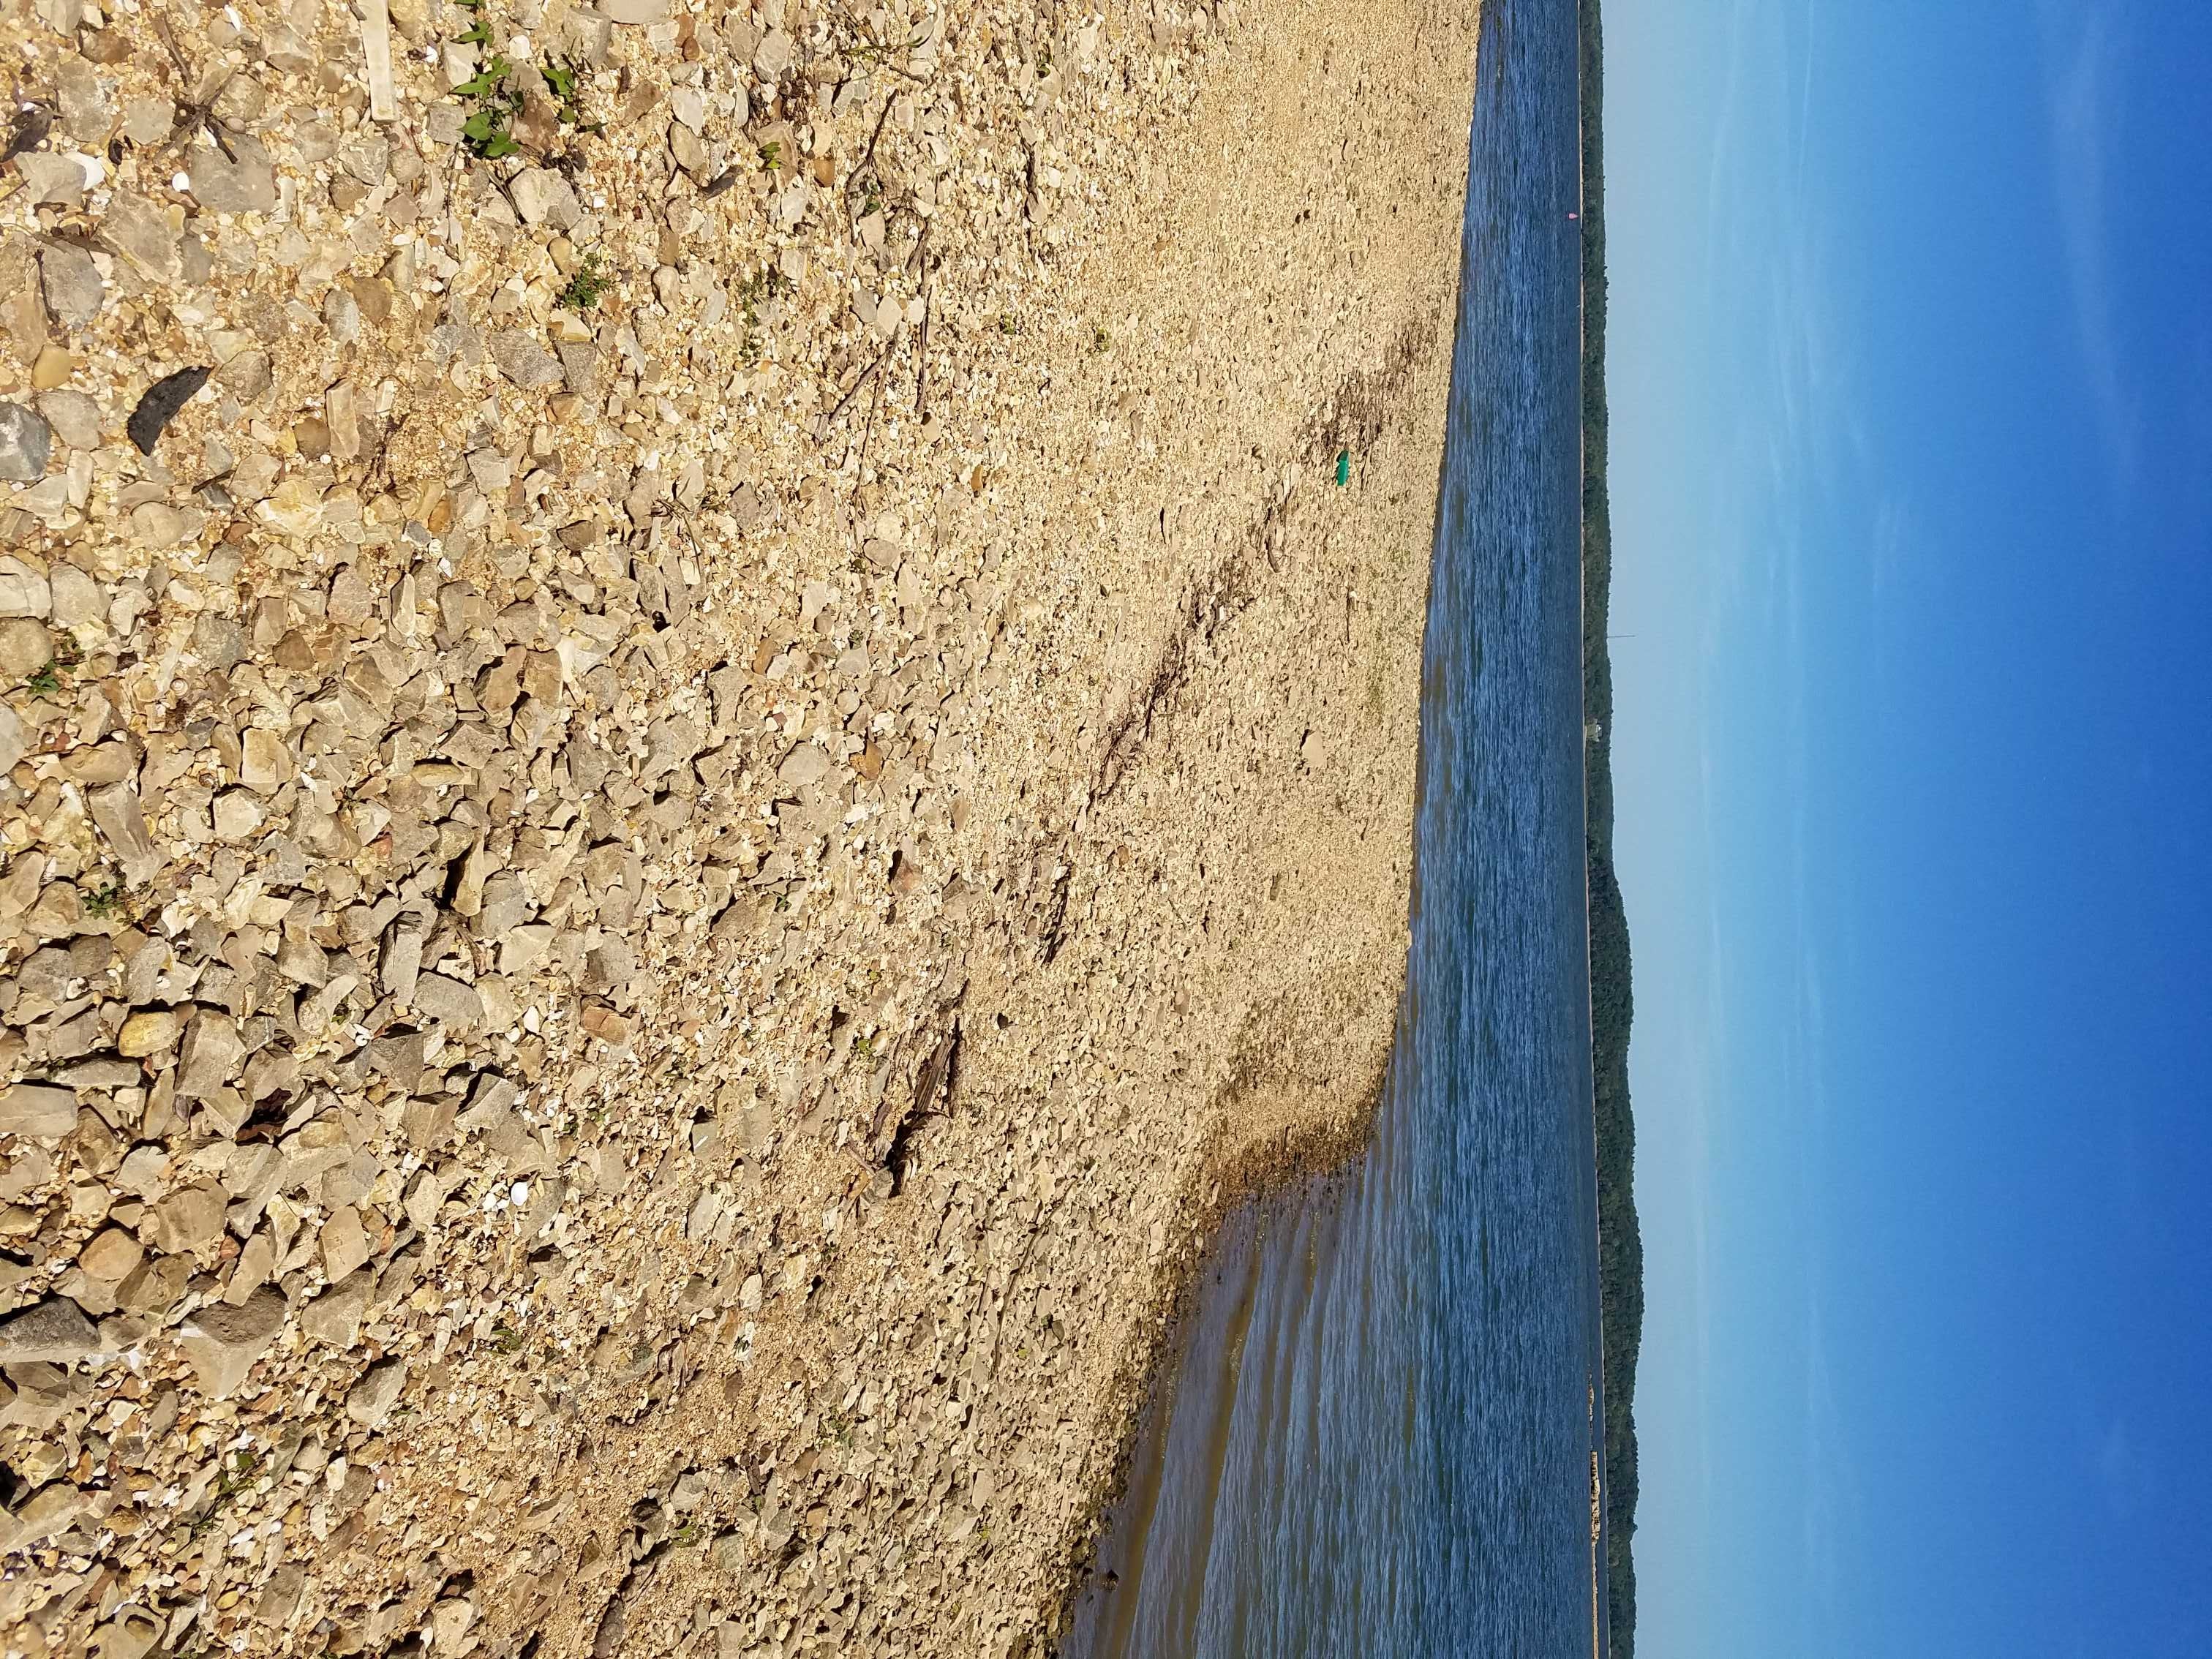 The beaches in Lamberton Lakes are really gravel ish